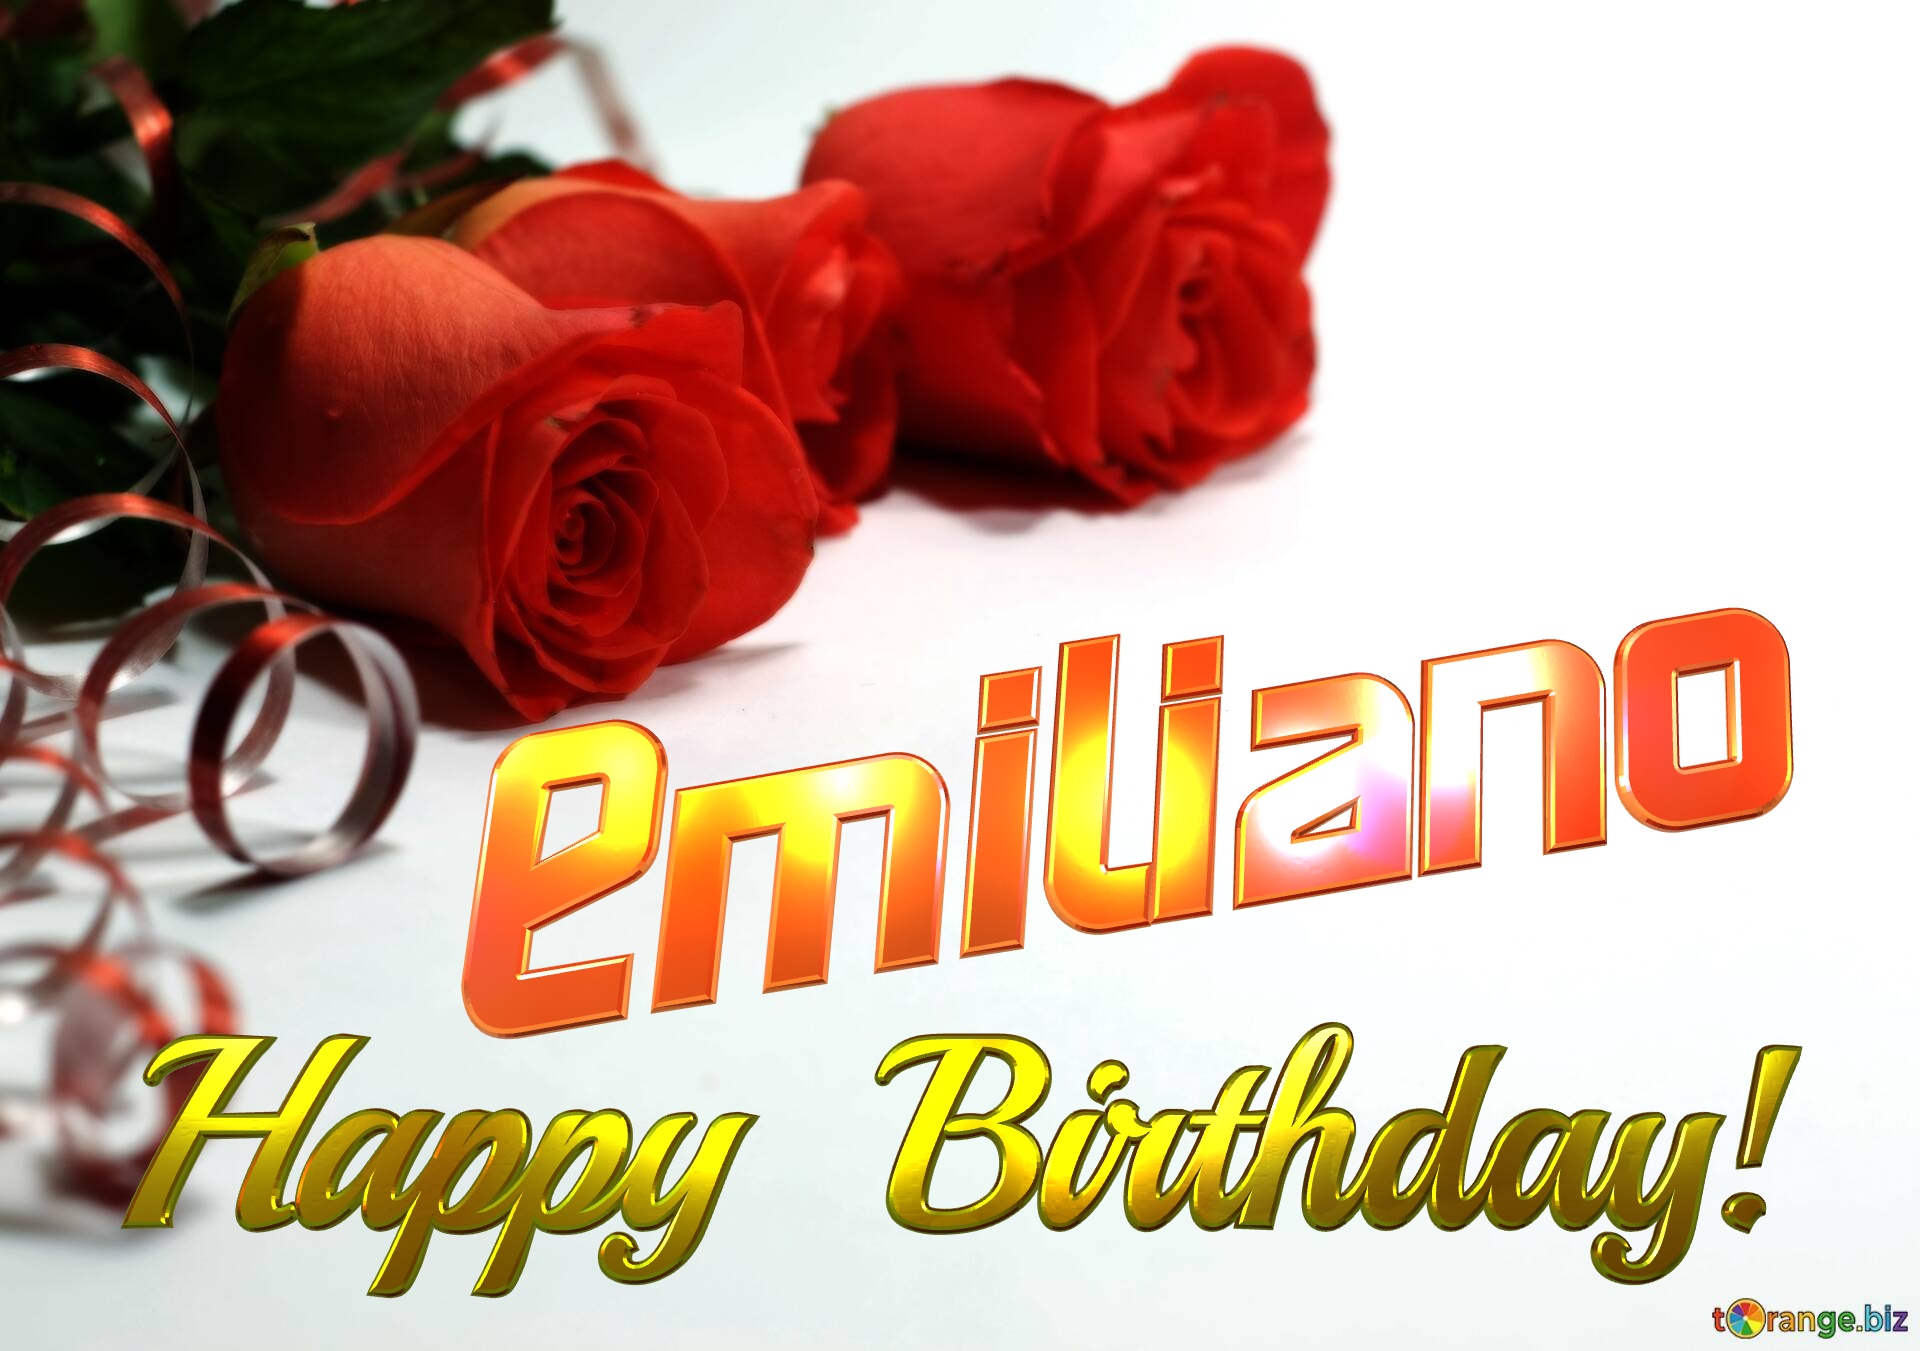 Emiliano   Birthday   Wishes background №0